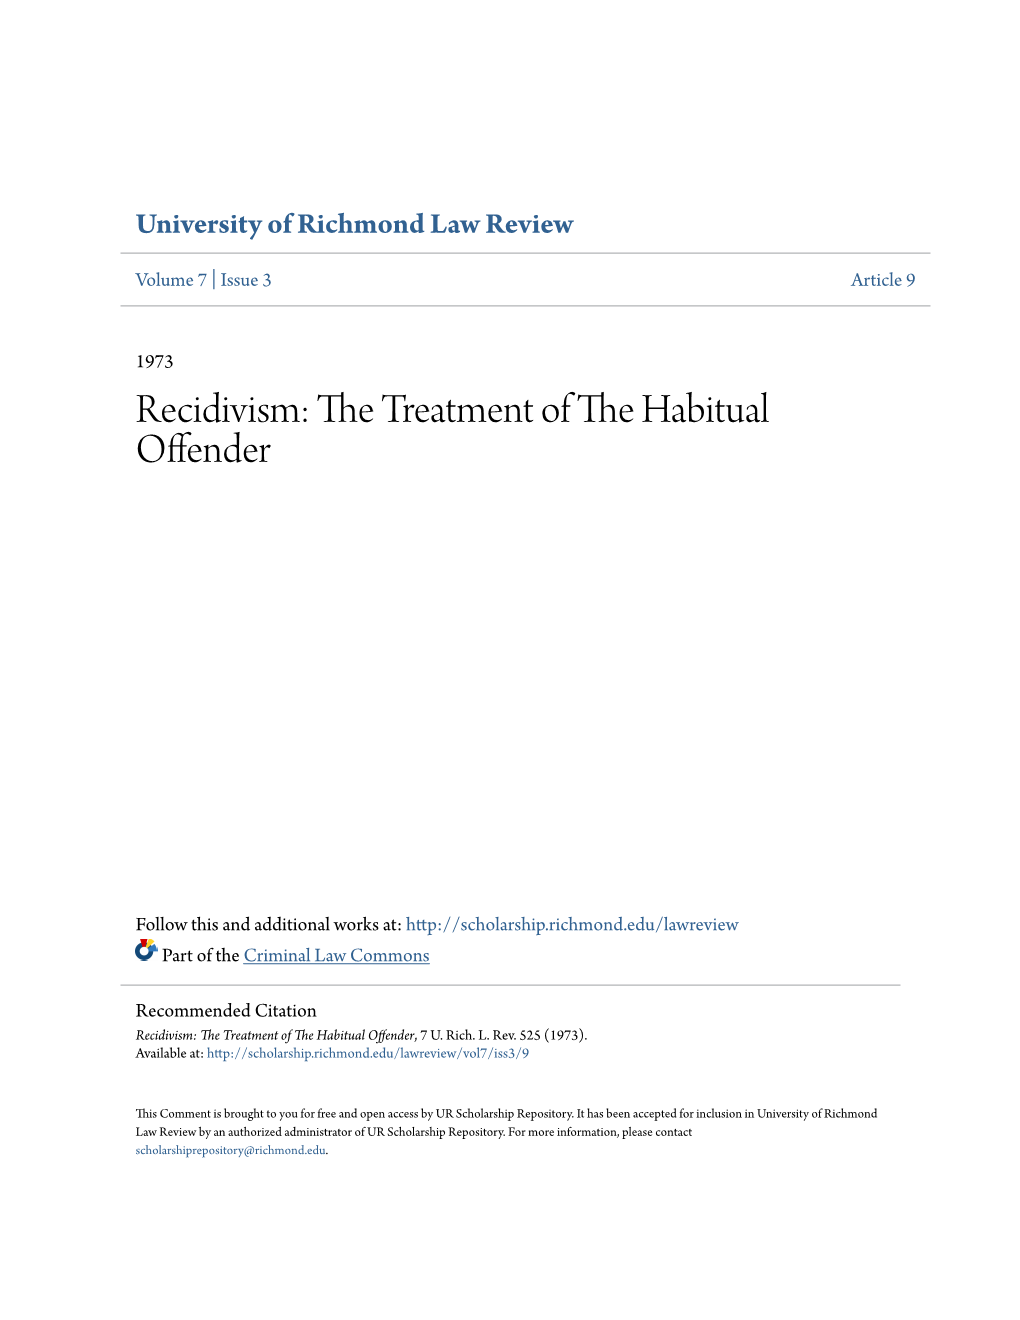 Recidivism: the Treatment of the Habitual Offender, 7 U